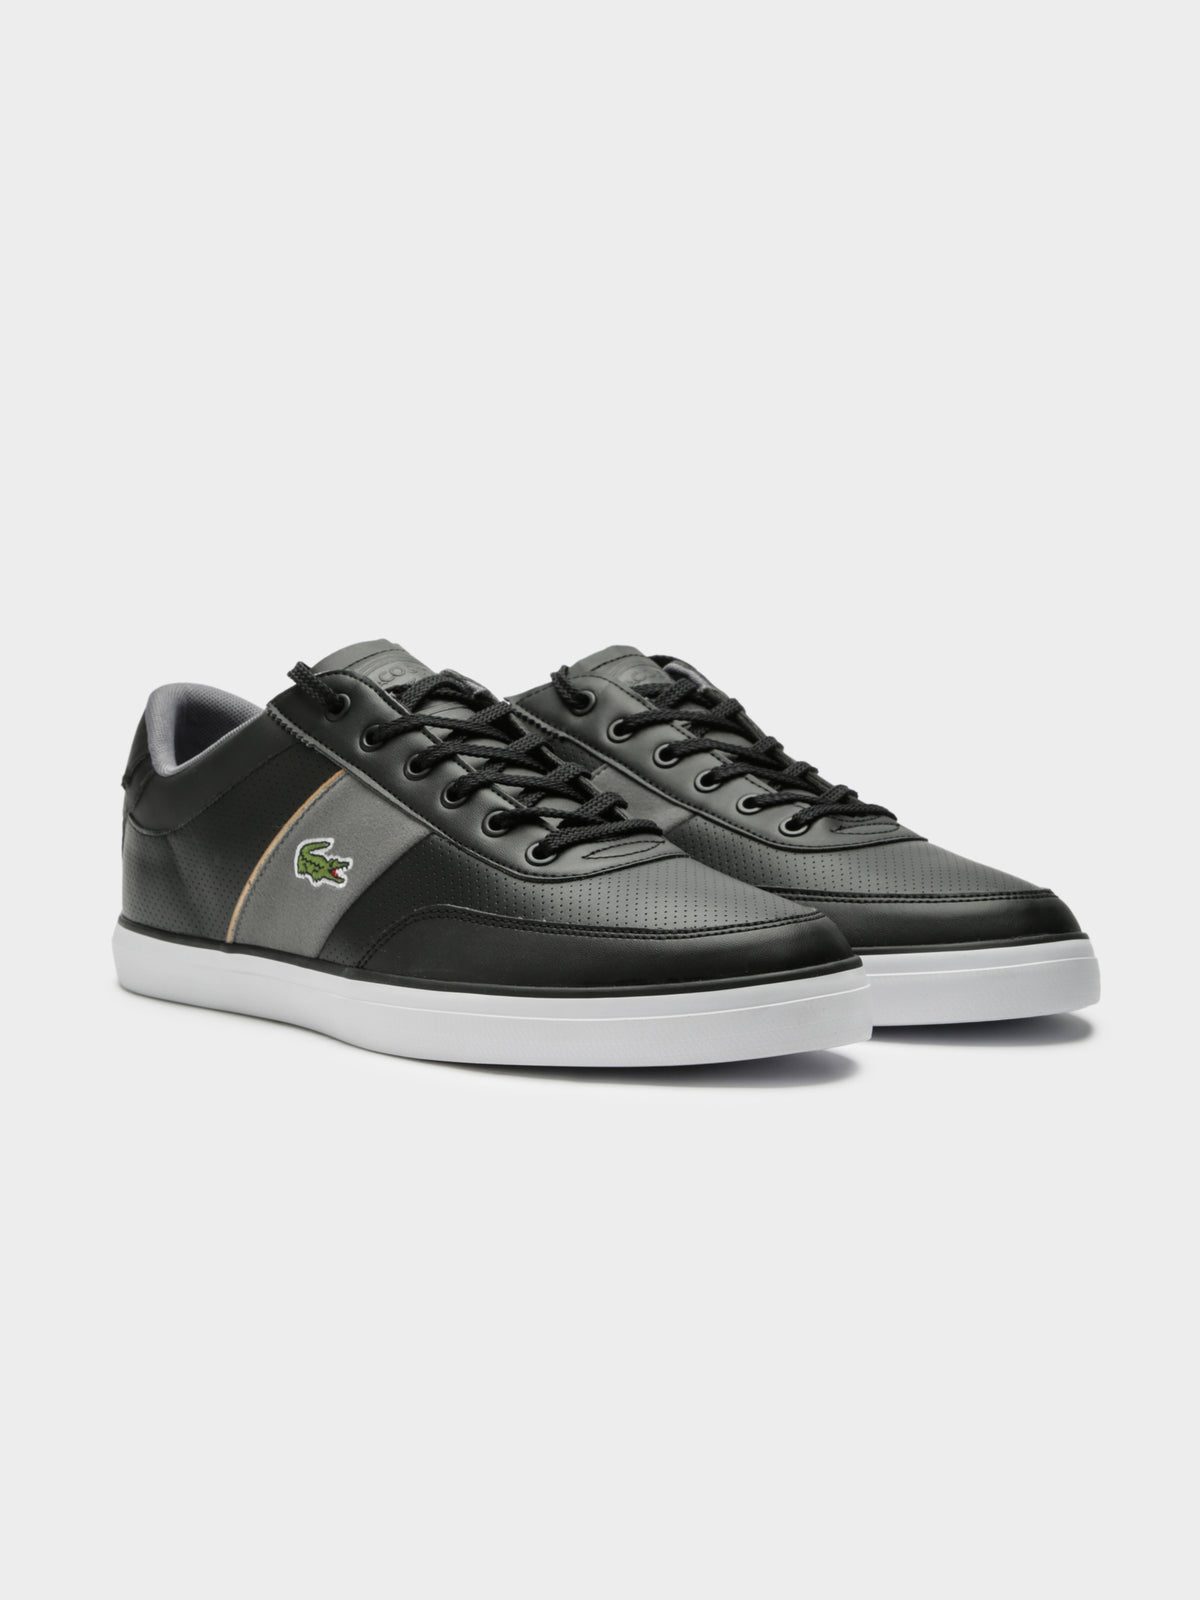 Mens Court Master 318 1 Sneakers in Black and Dark Grey